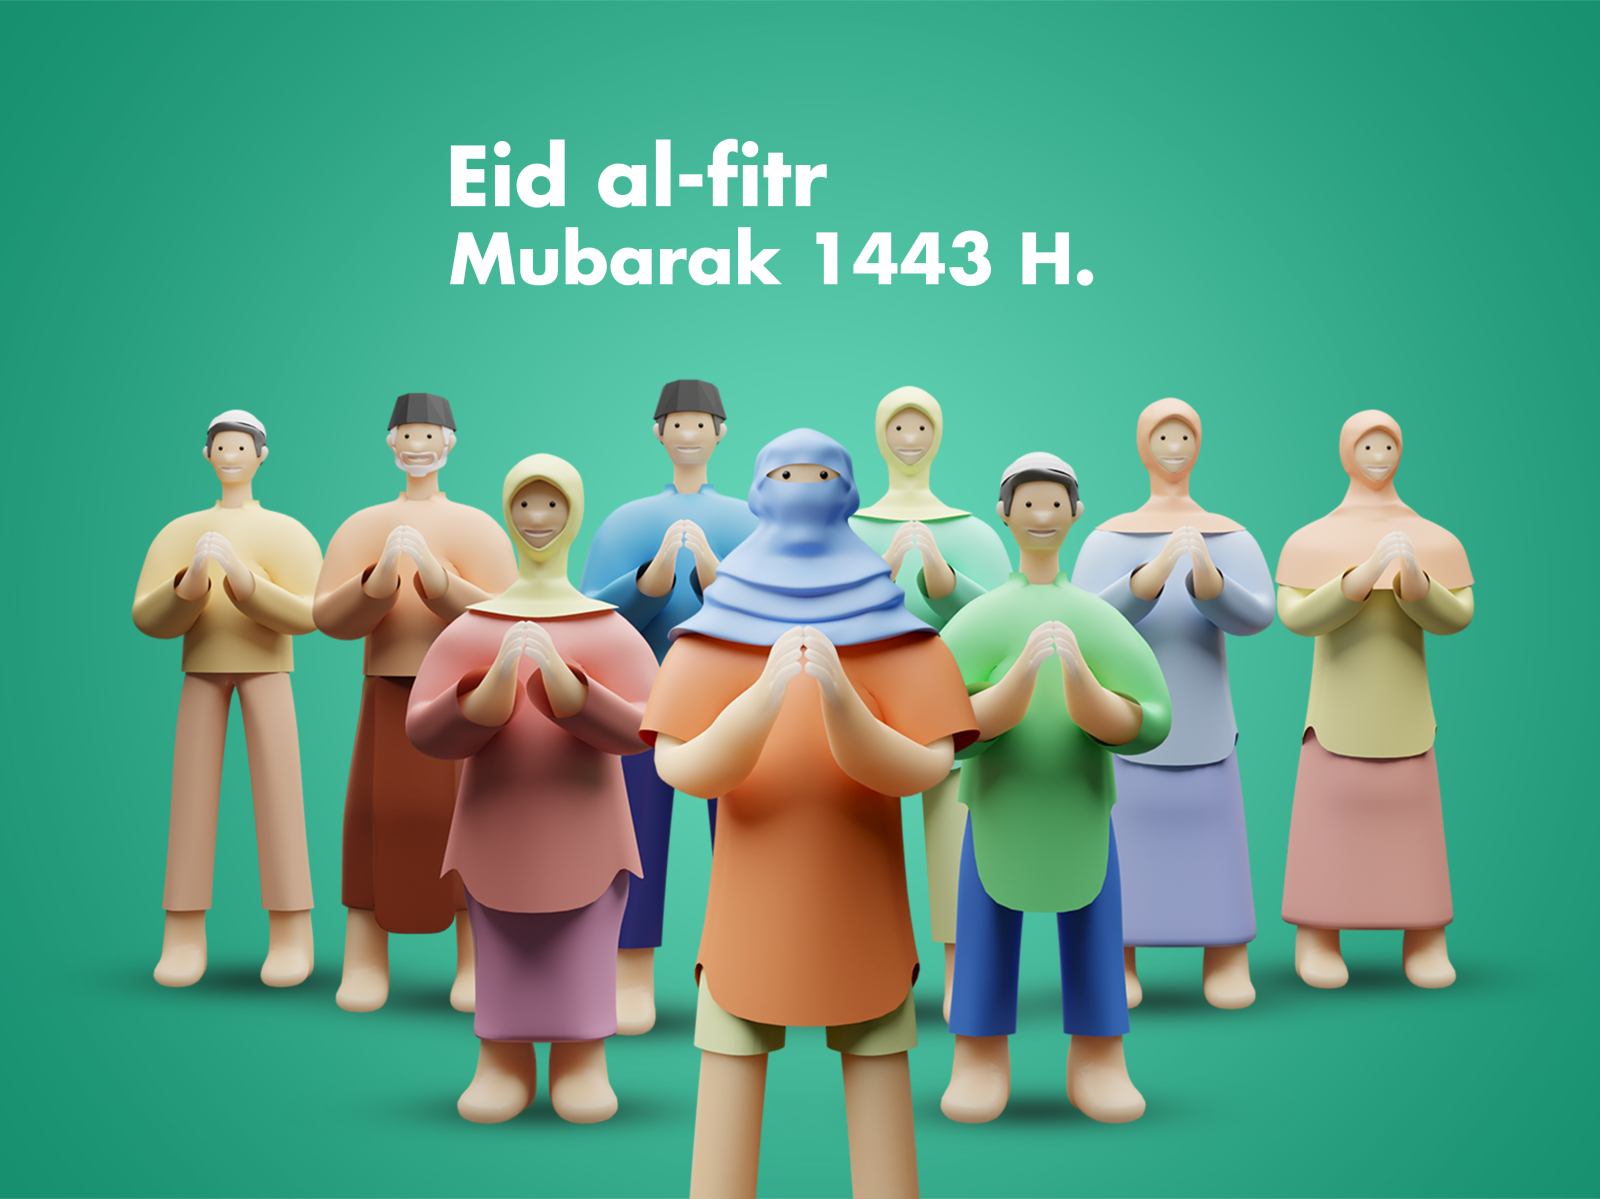 Bermaaffan di hari yang fitri 3d eidal-iftr eidmubarak idulfitri illustration isometric ramadan